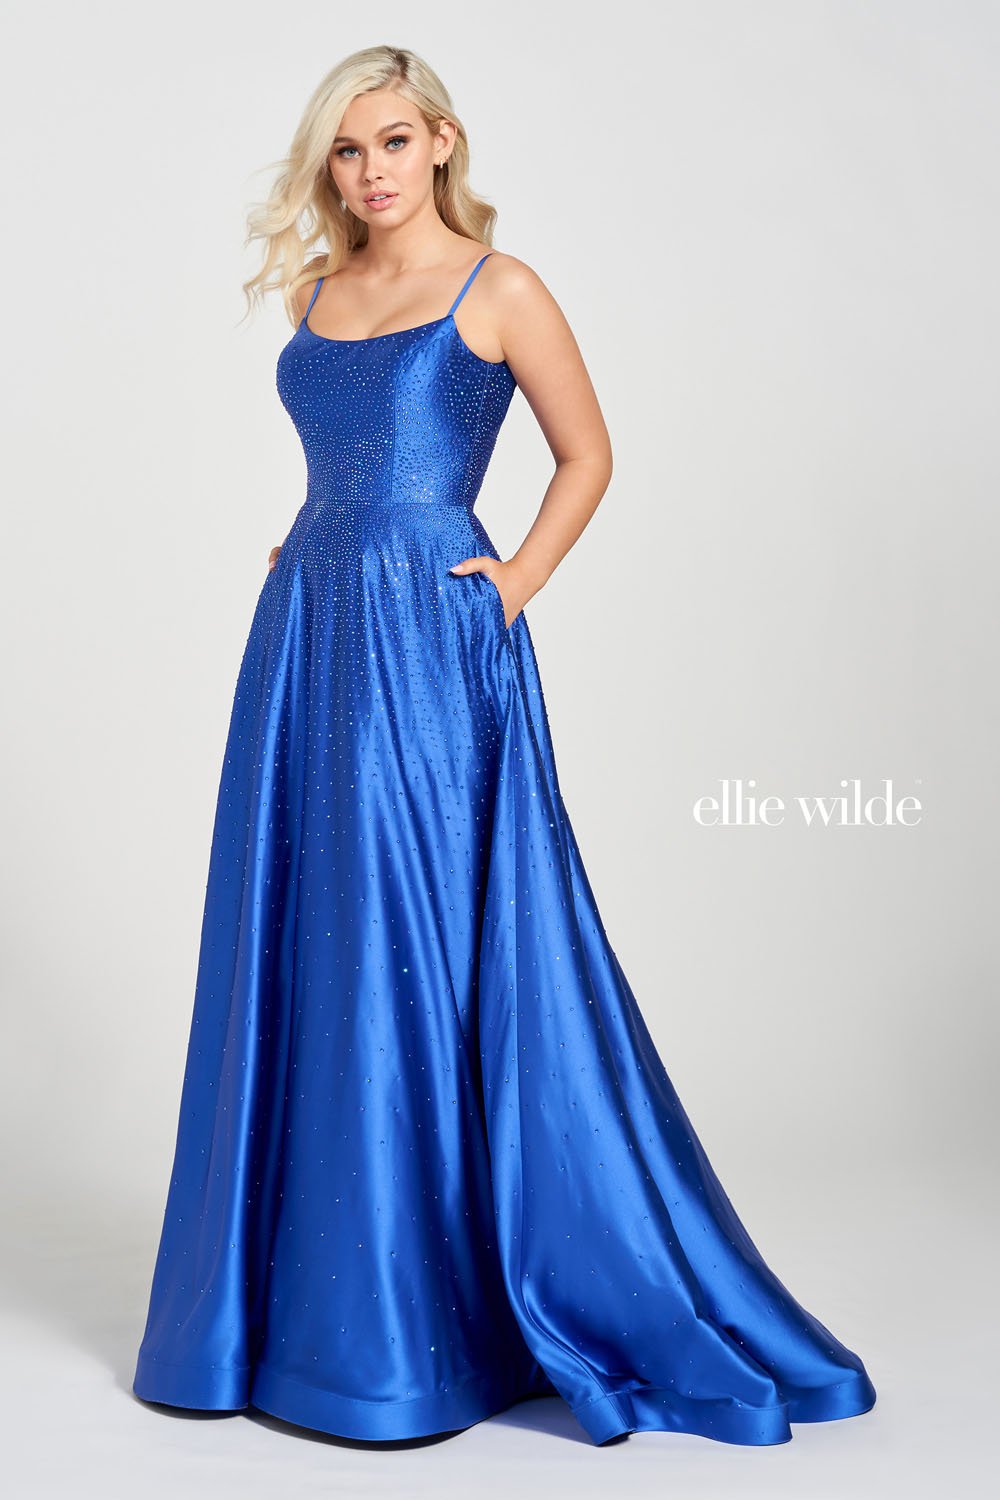 Ellie Wilde Royal Blue EW122119 Prom Dress Image.  Royal Blue formal dress.